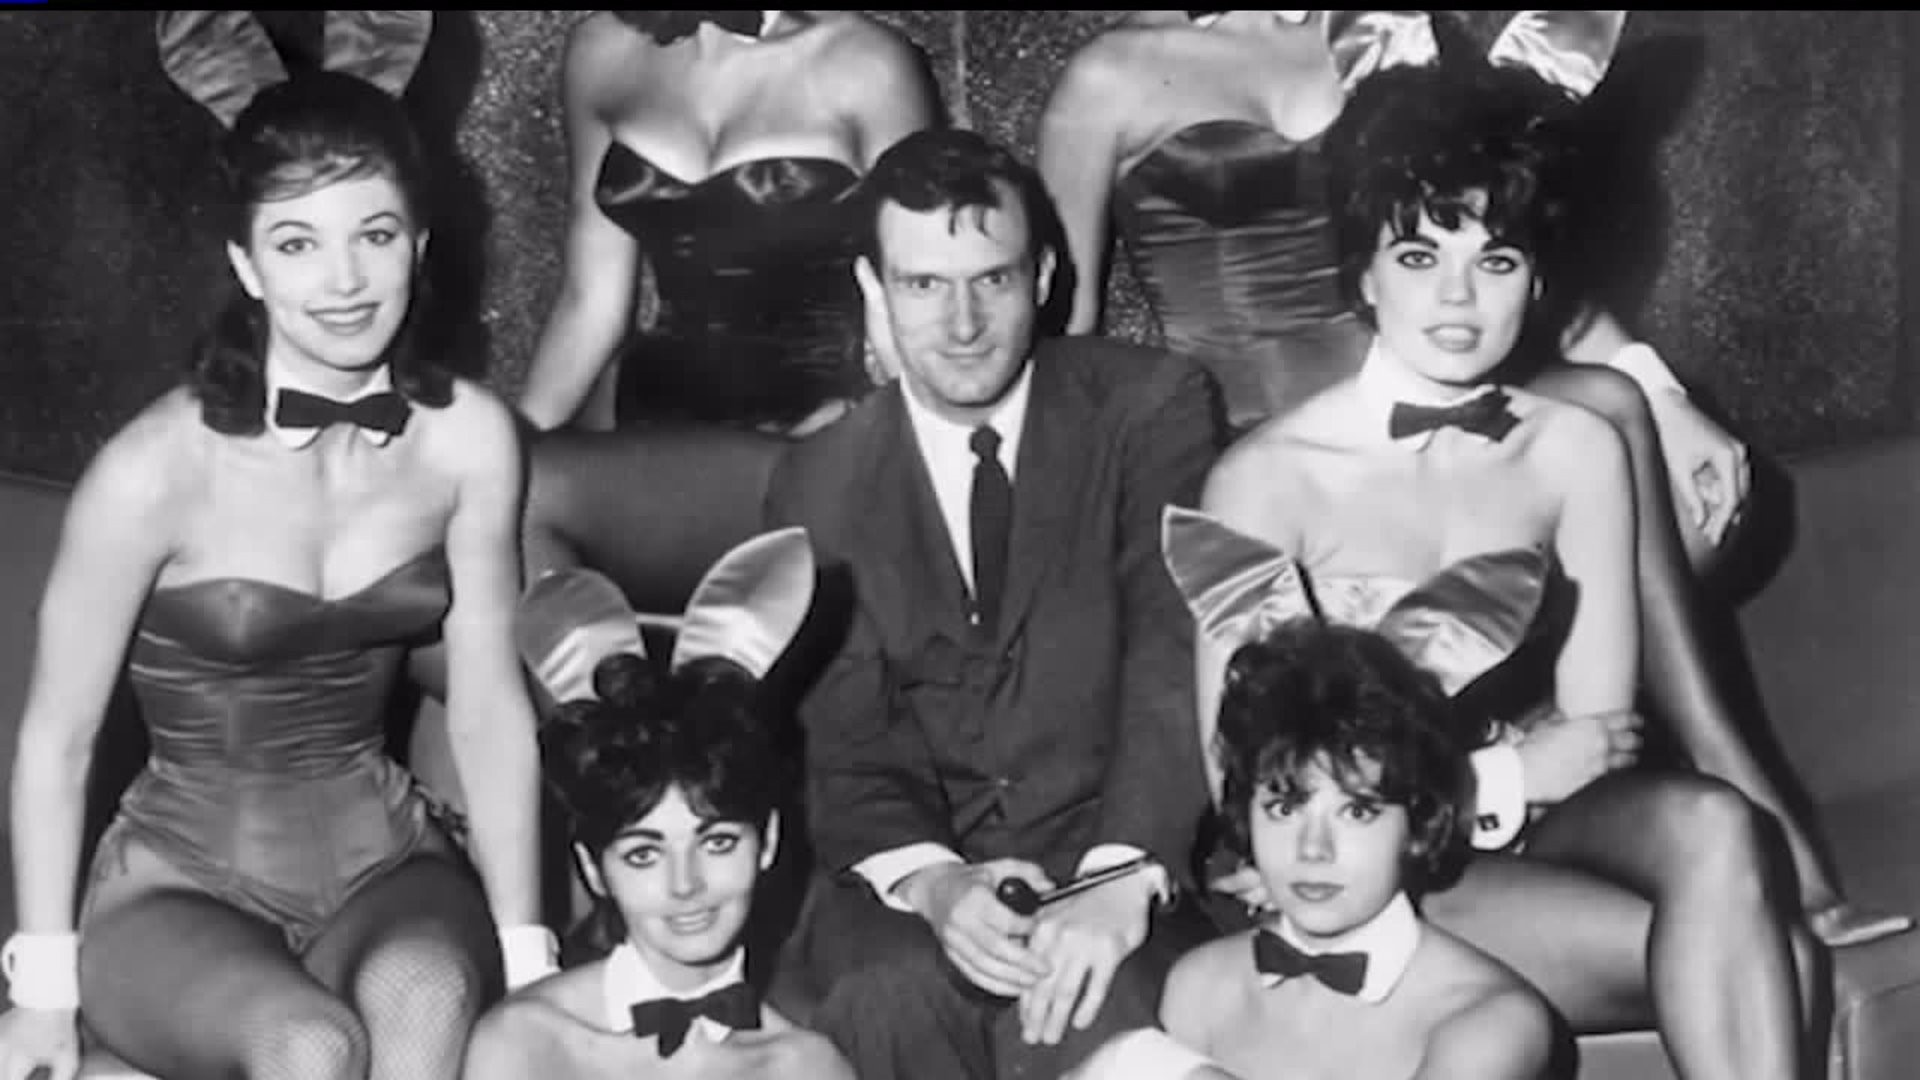 Lebanon photographer and Playboy models discuss impact of Hugh Hefner